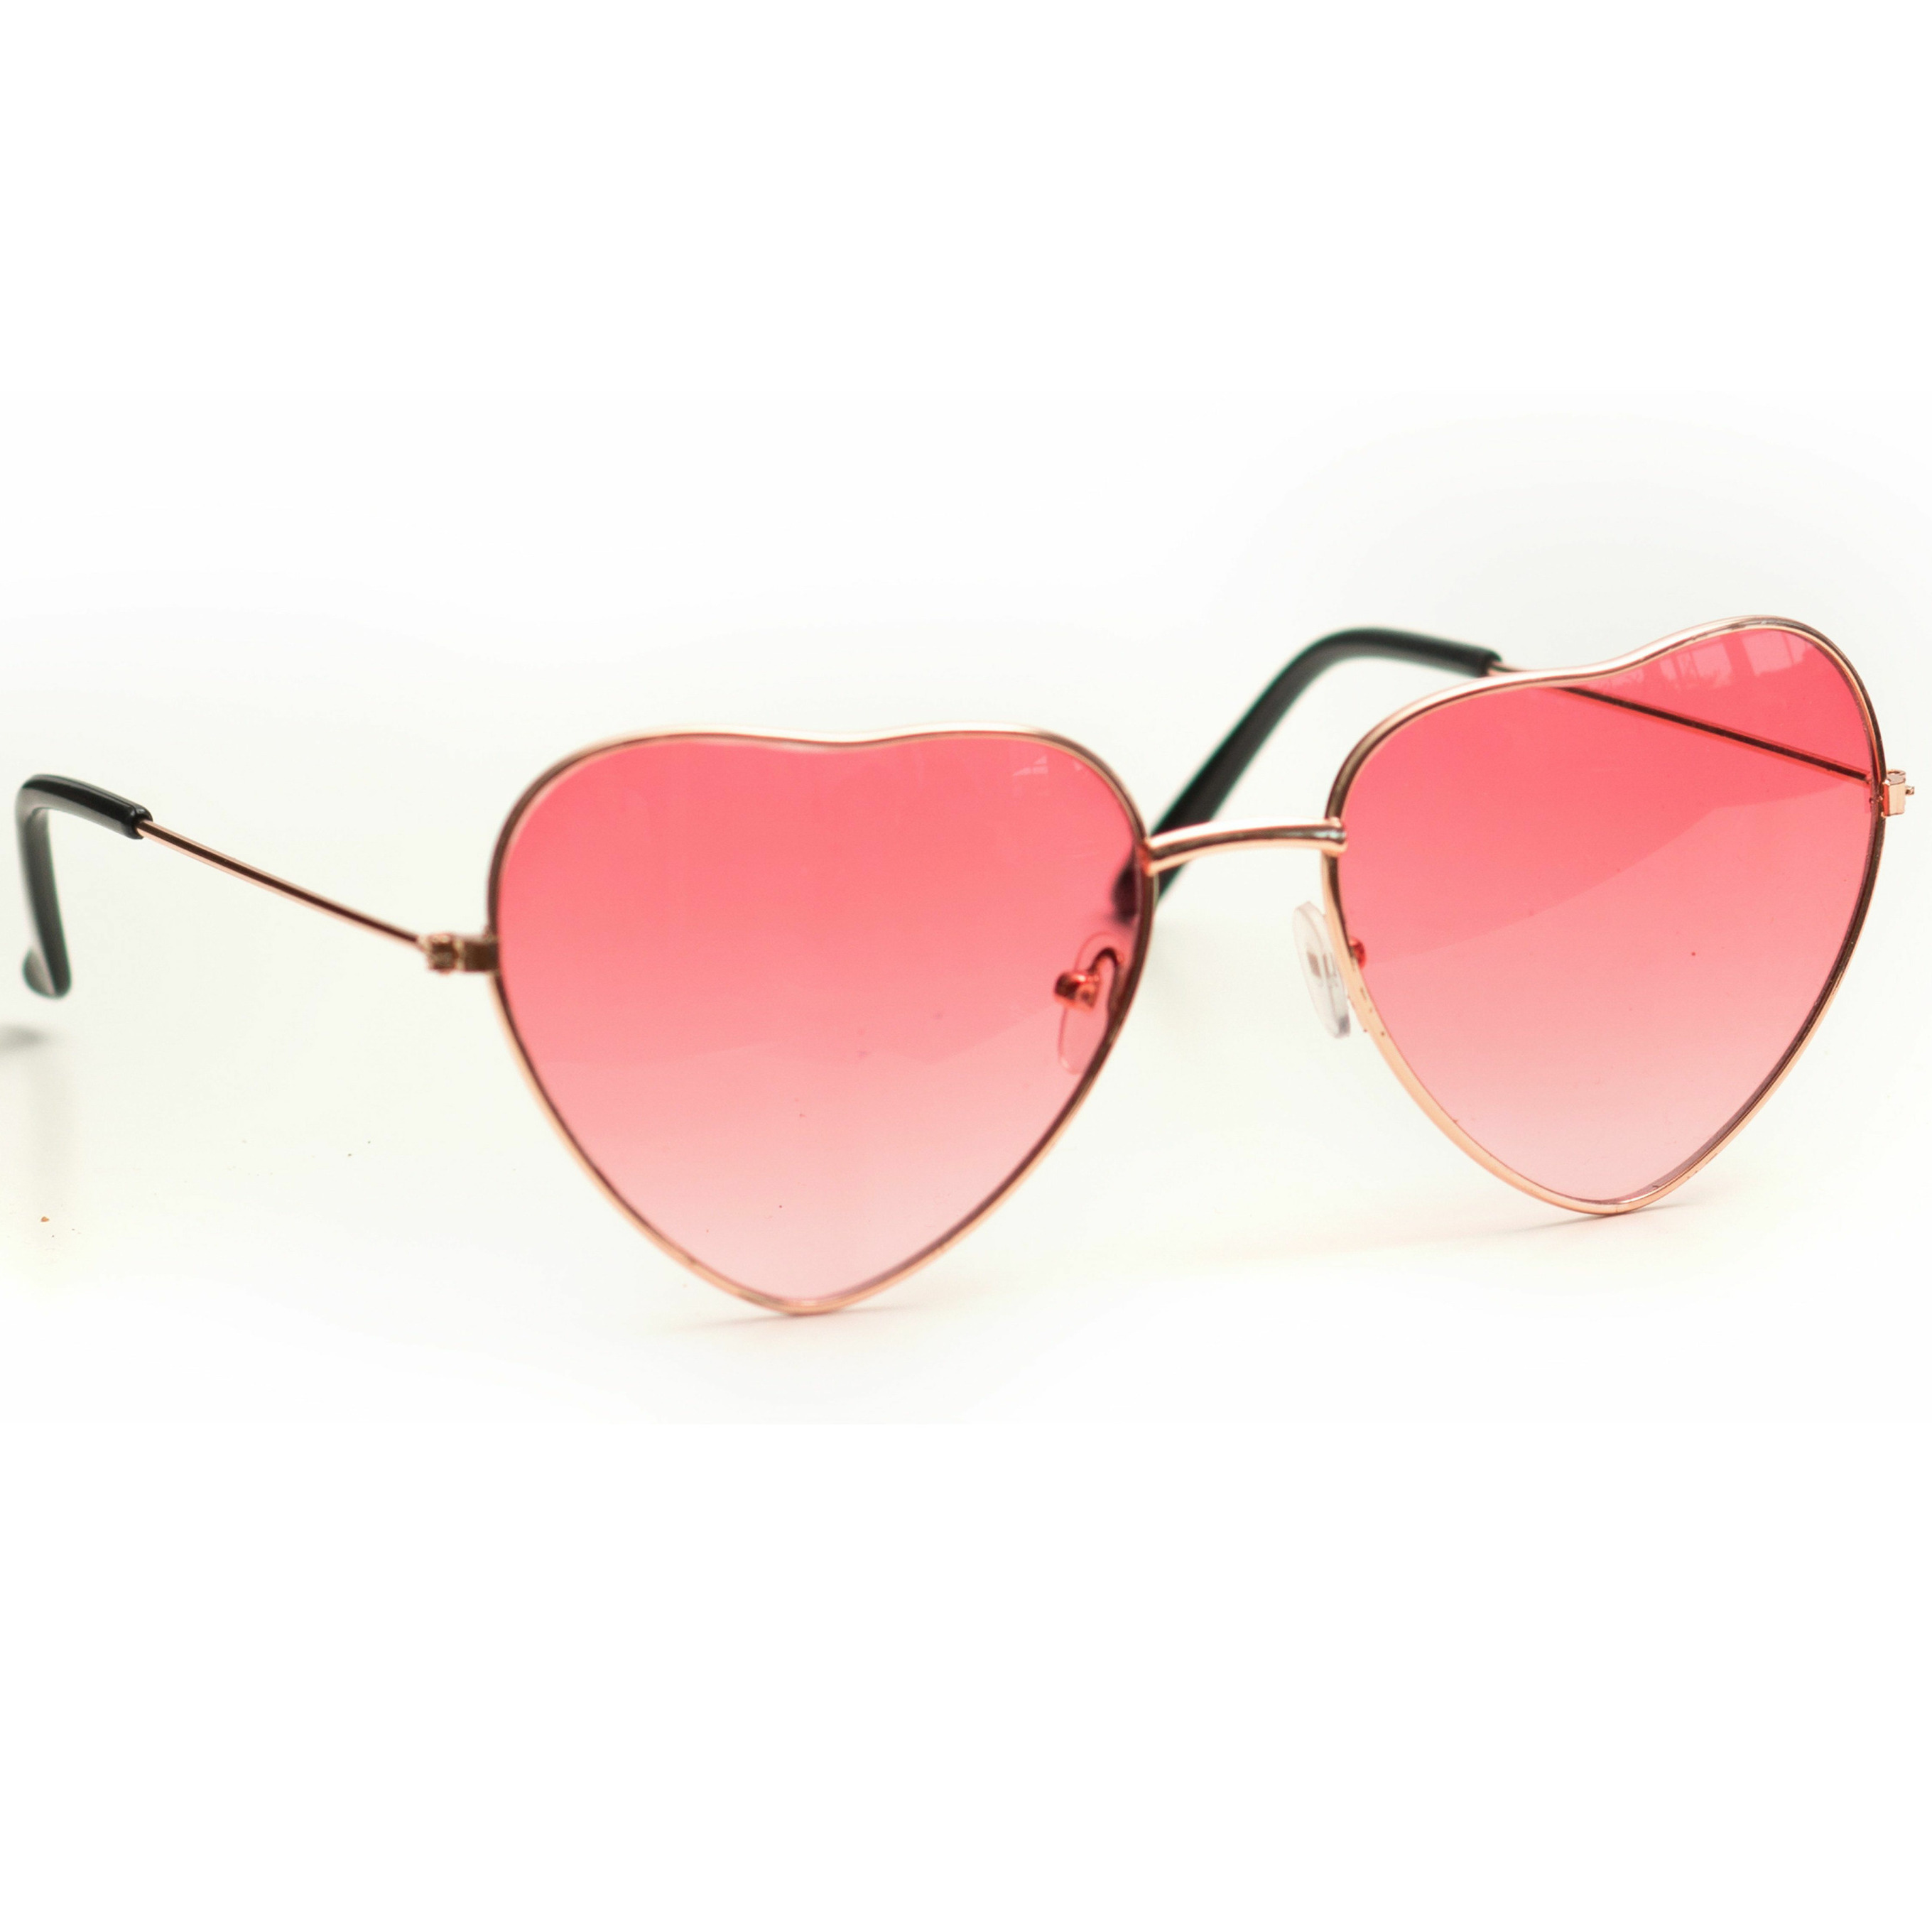 Hippie Flower Power hartjes zonnebril roze - Sixties